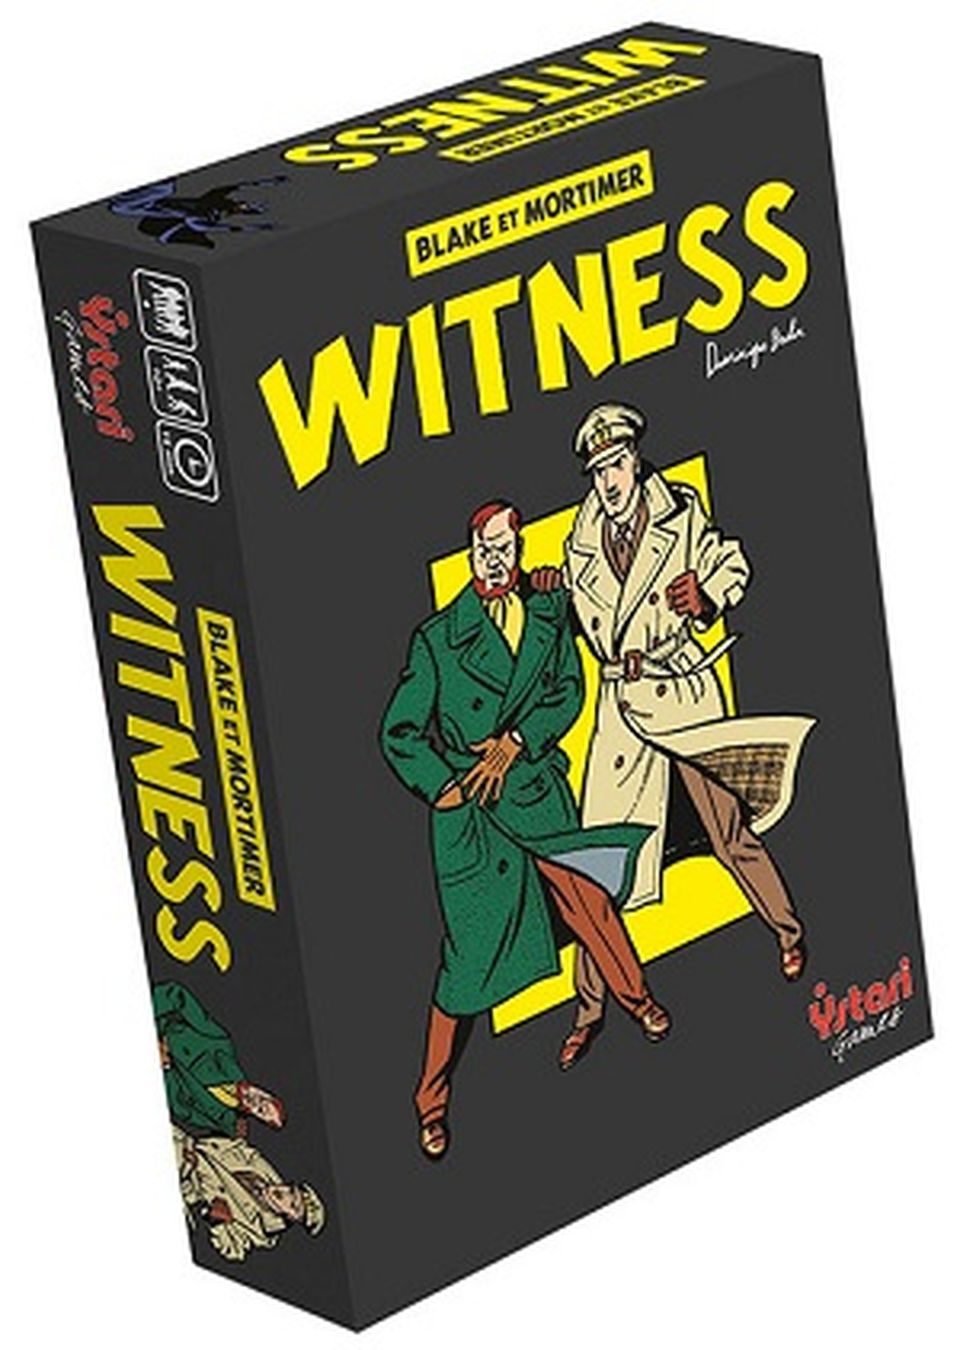 Witness - Blake & Mortimer image